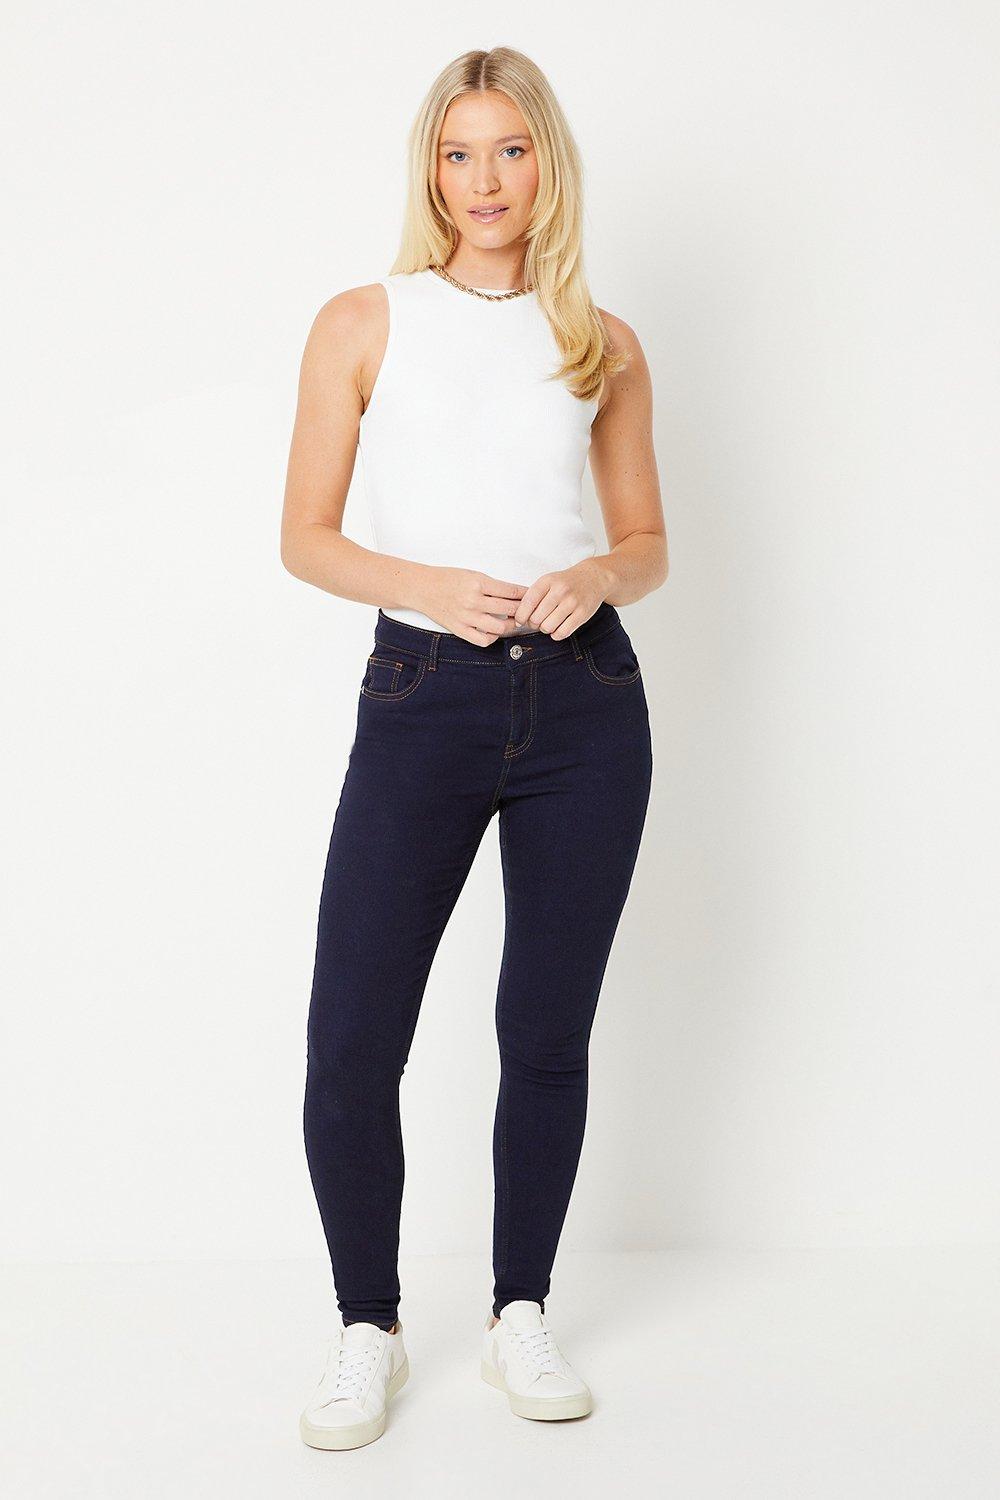 Women's Comfort Stretch Skinny Jeans - indigo - 18